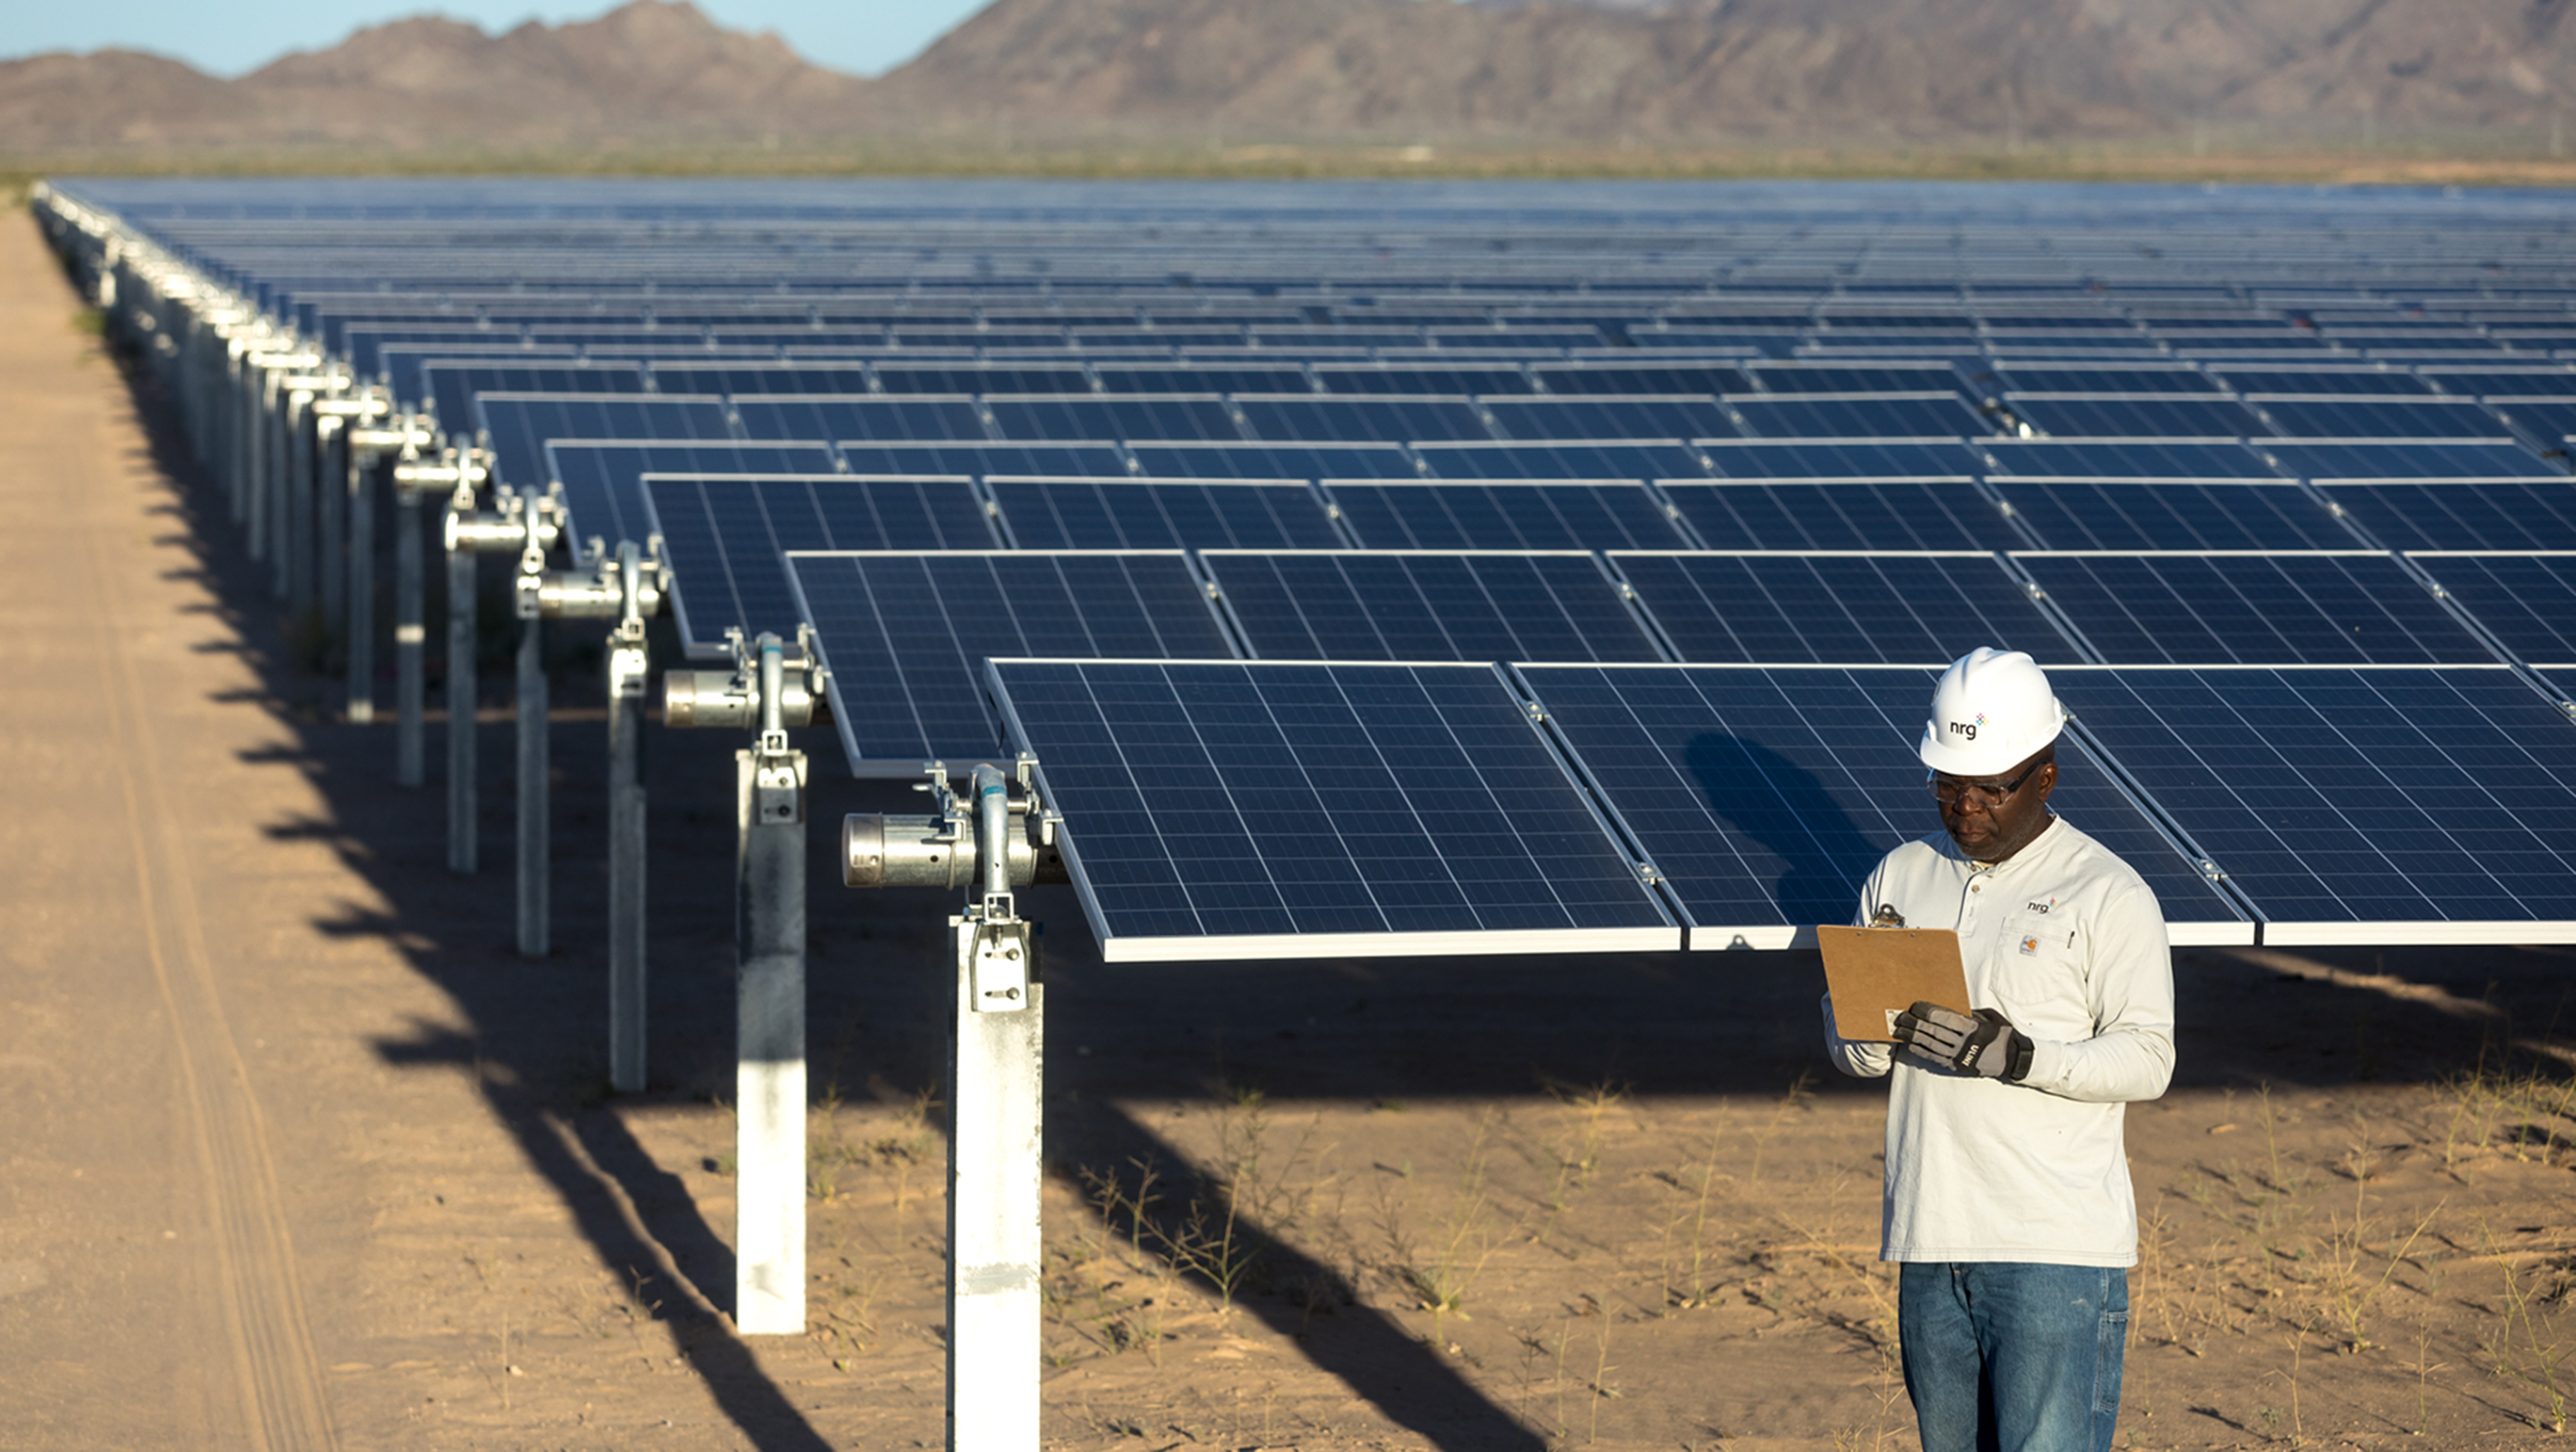 nrg-completes-solar-facility-for-cisco-in-california-nrg-energy